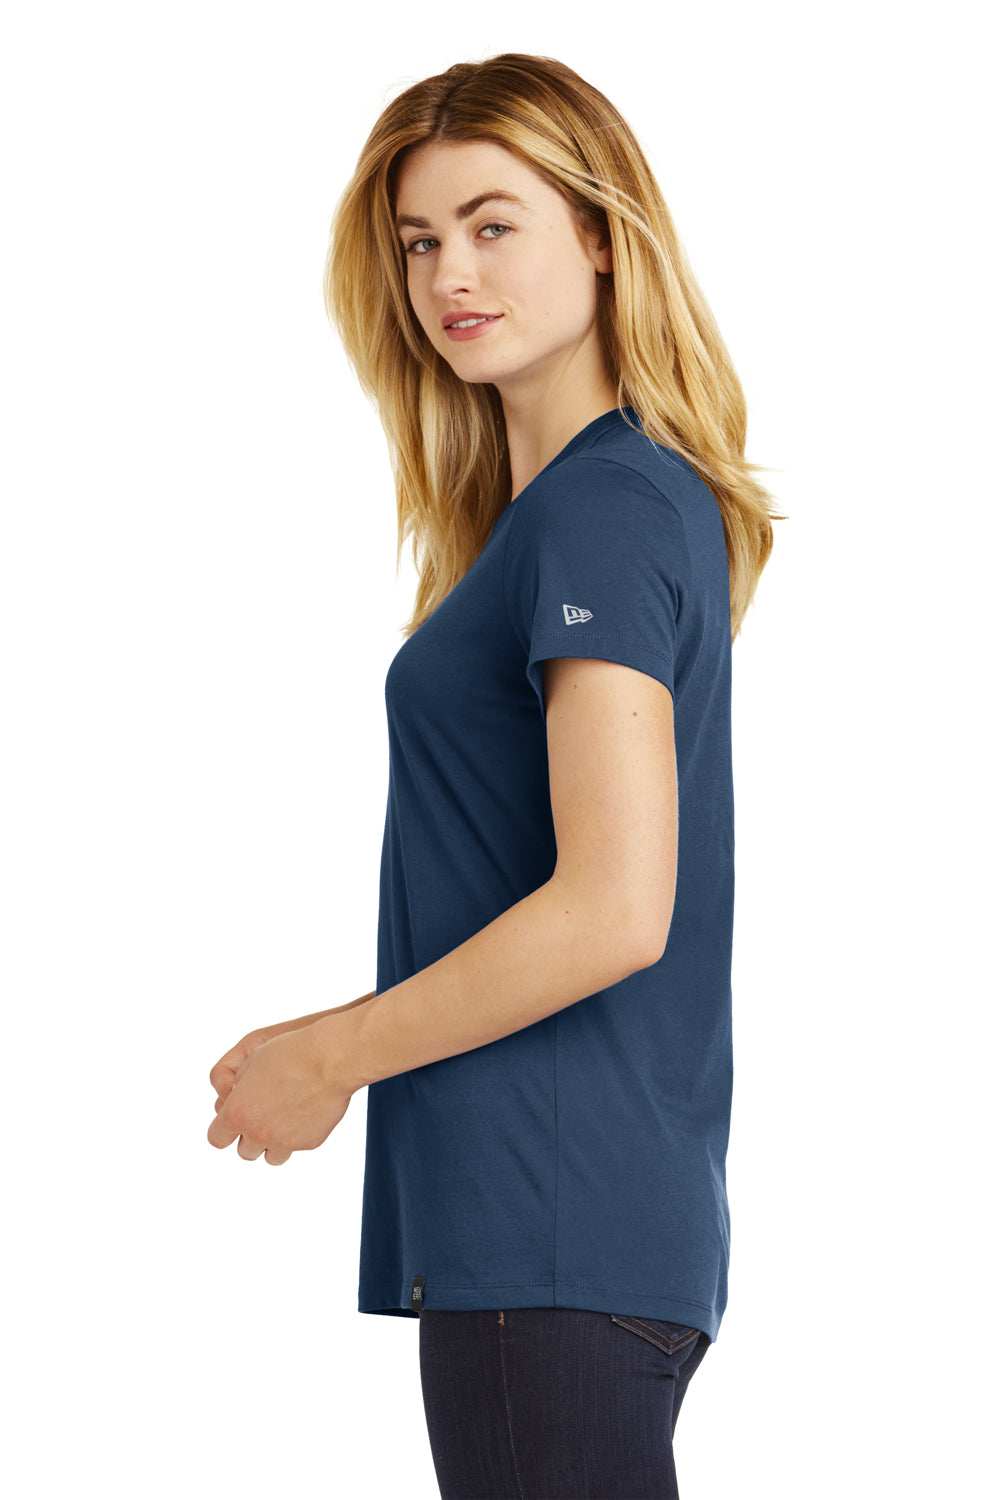 New Era LNEA100 Womens Heritage Short Sleeve Crewneck T-Shirt Dark Royal Blue Side